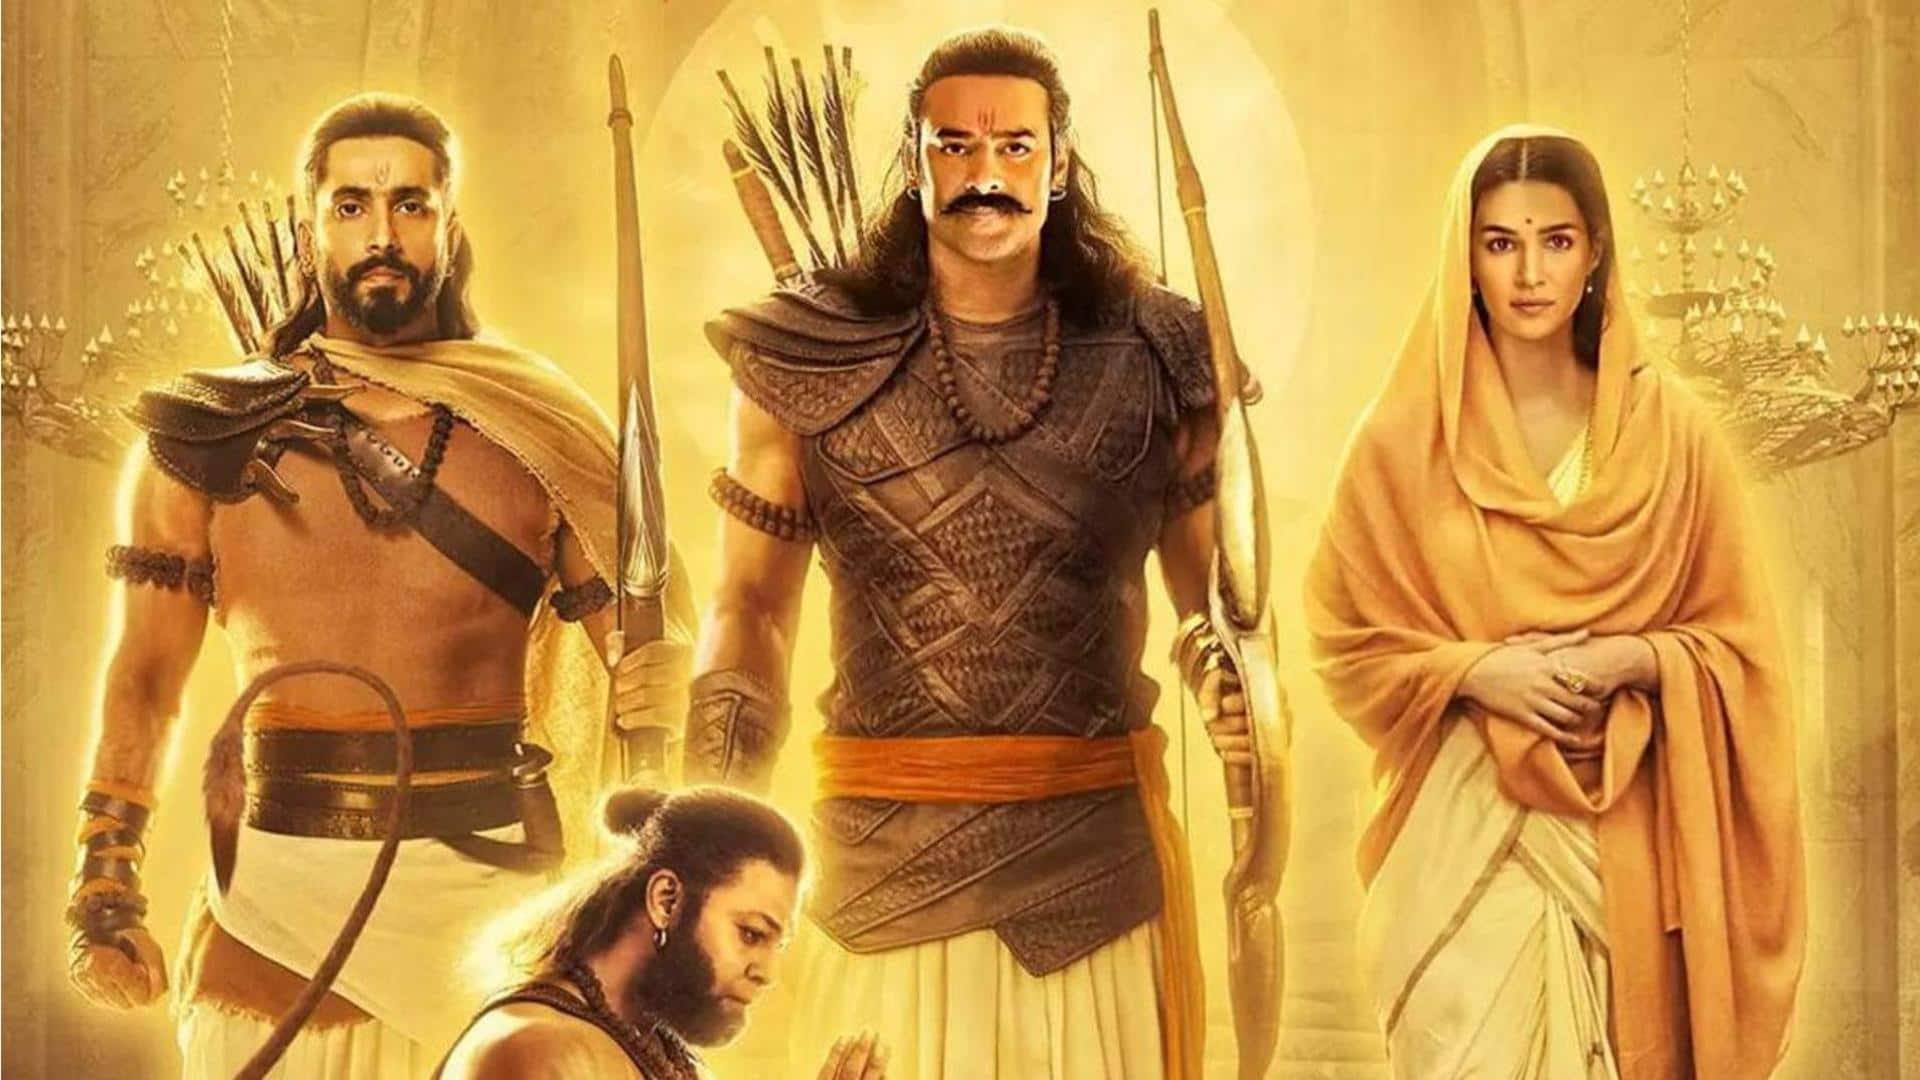 'Adipurush' trailer creates viewership record, hits 1M likes in 24hrs